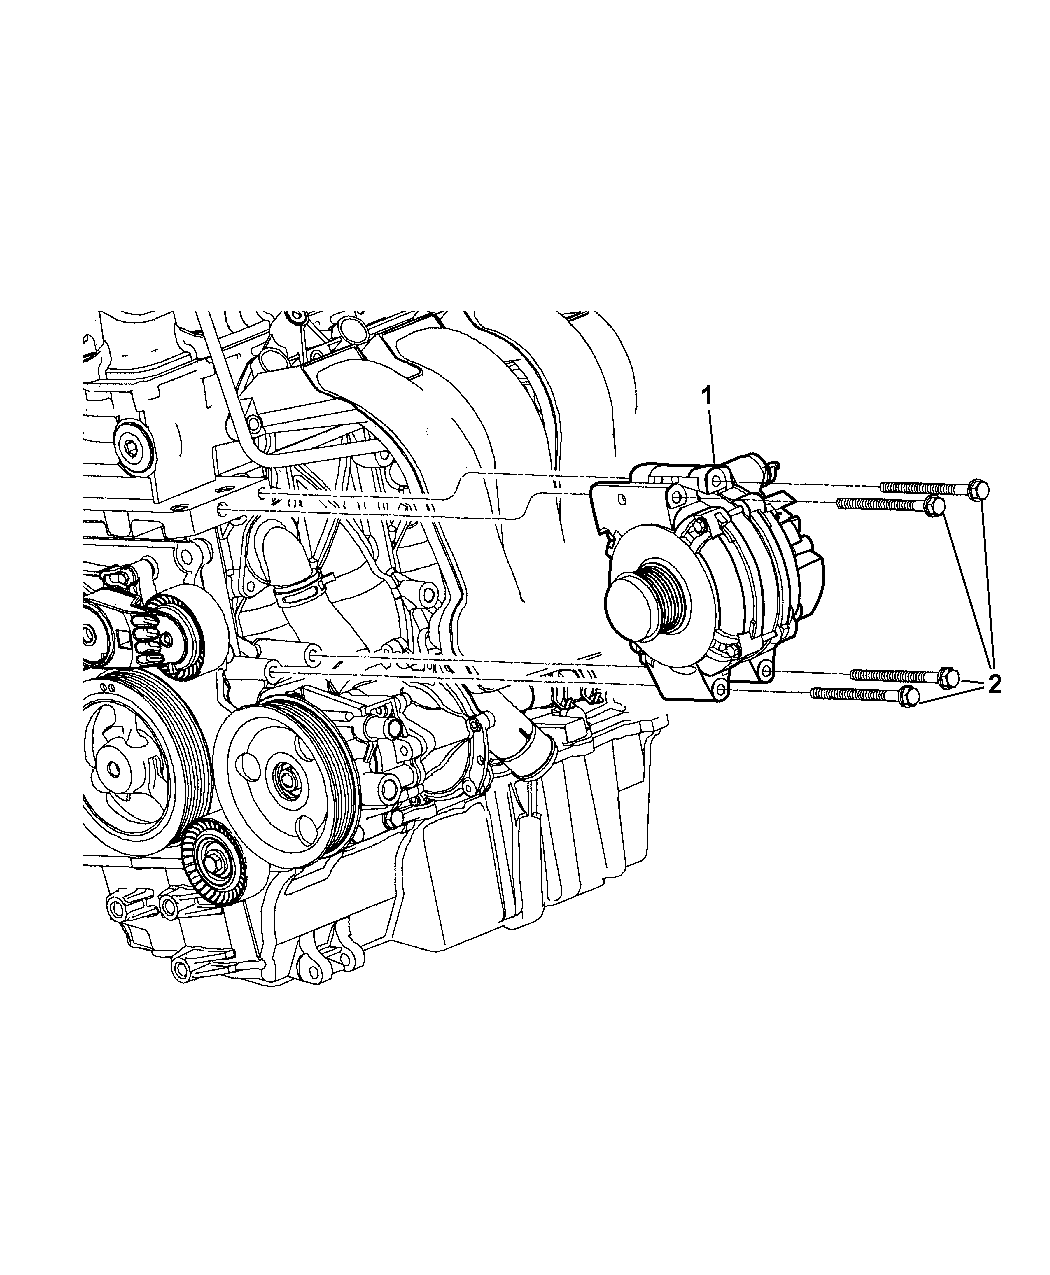 Pt Cruiser Alternator Wiring Diagram